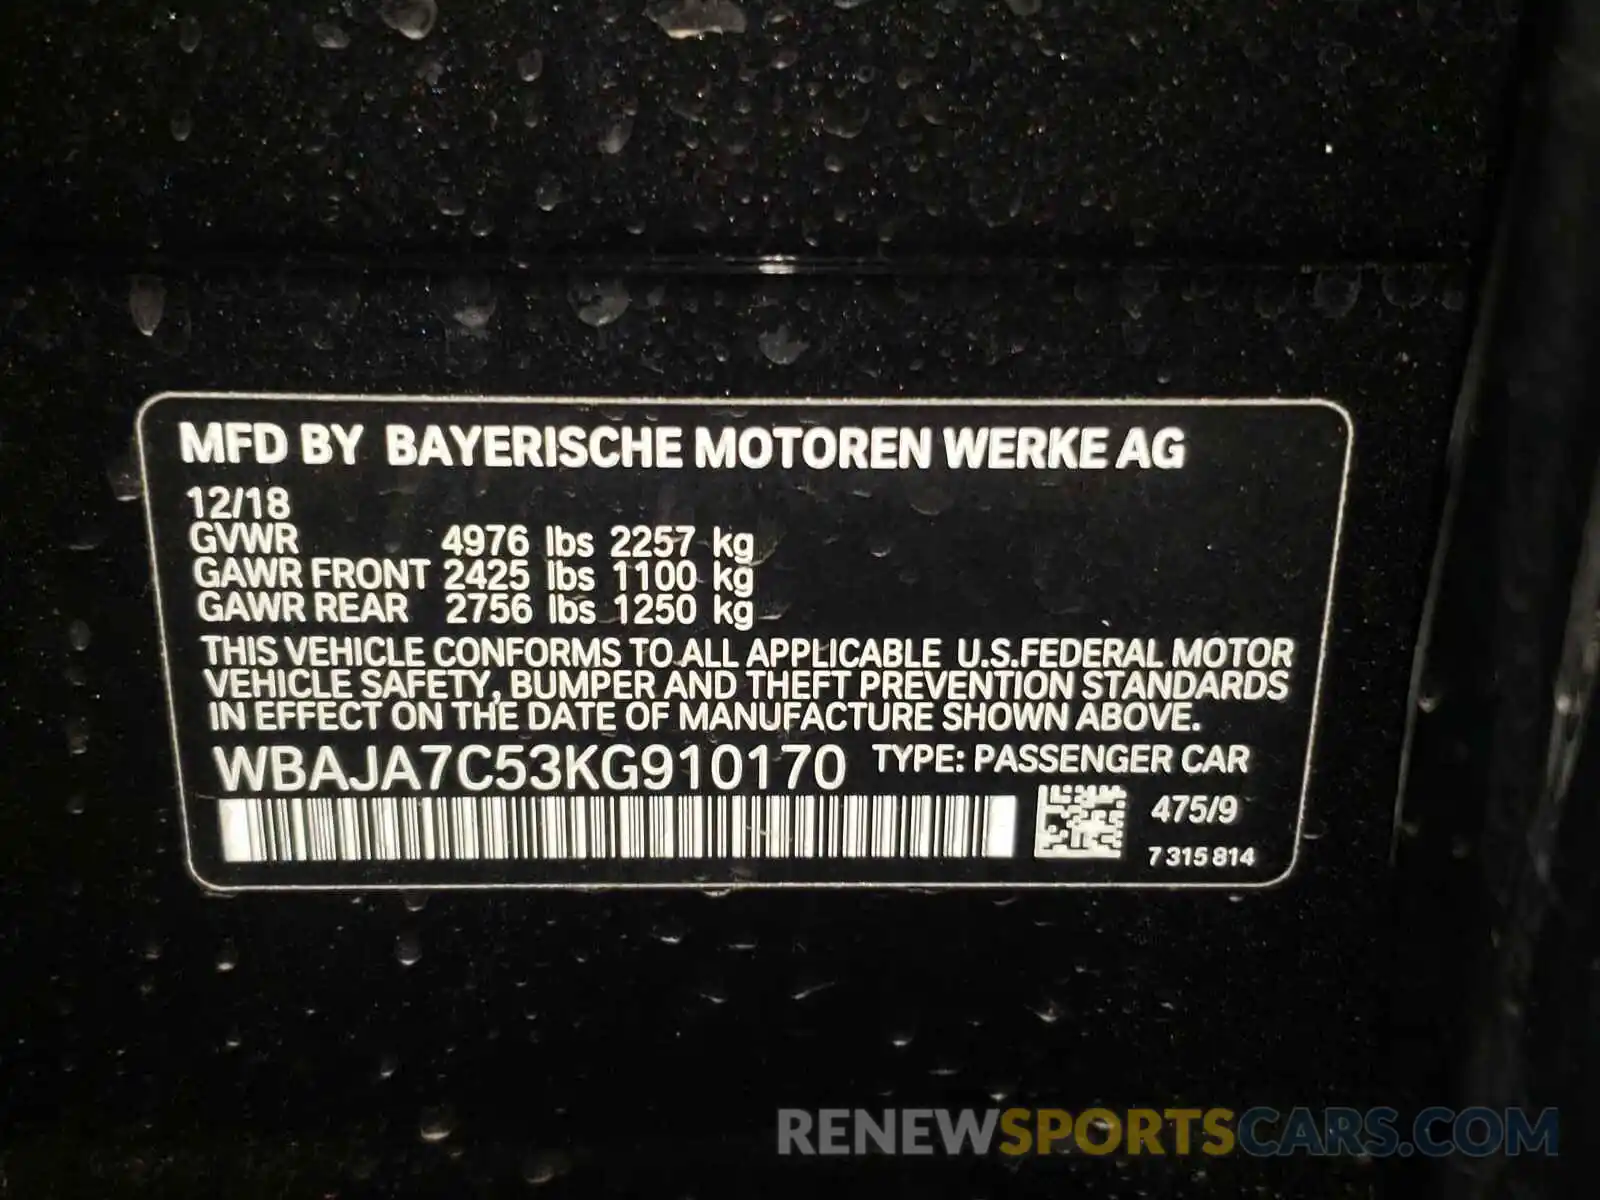 10 Photograph of a damaged car WBAJA7C53KG910170 BMW 5 SERIES 2019